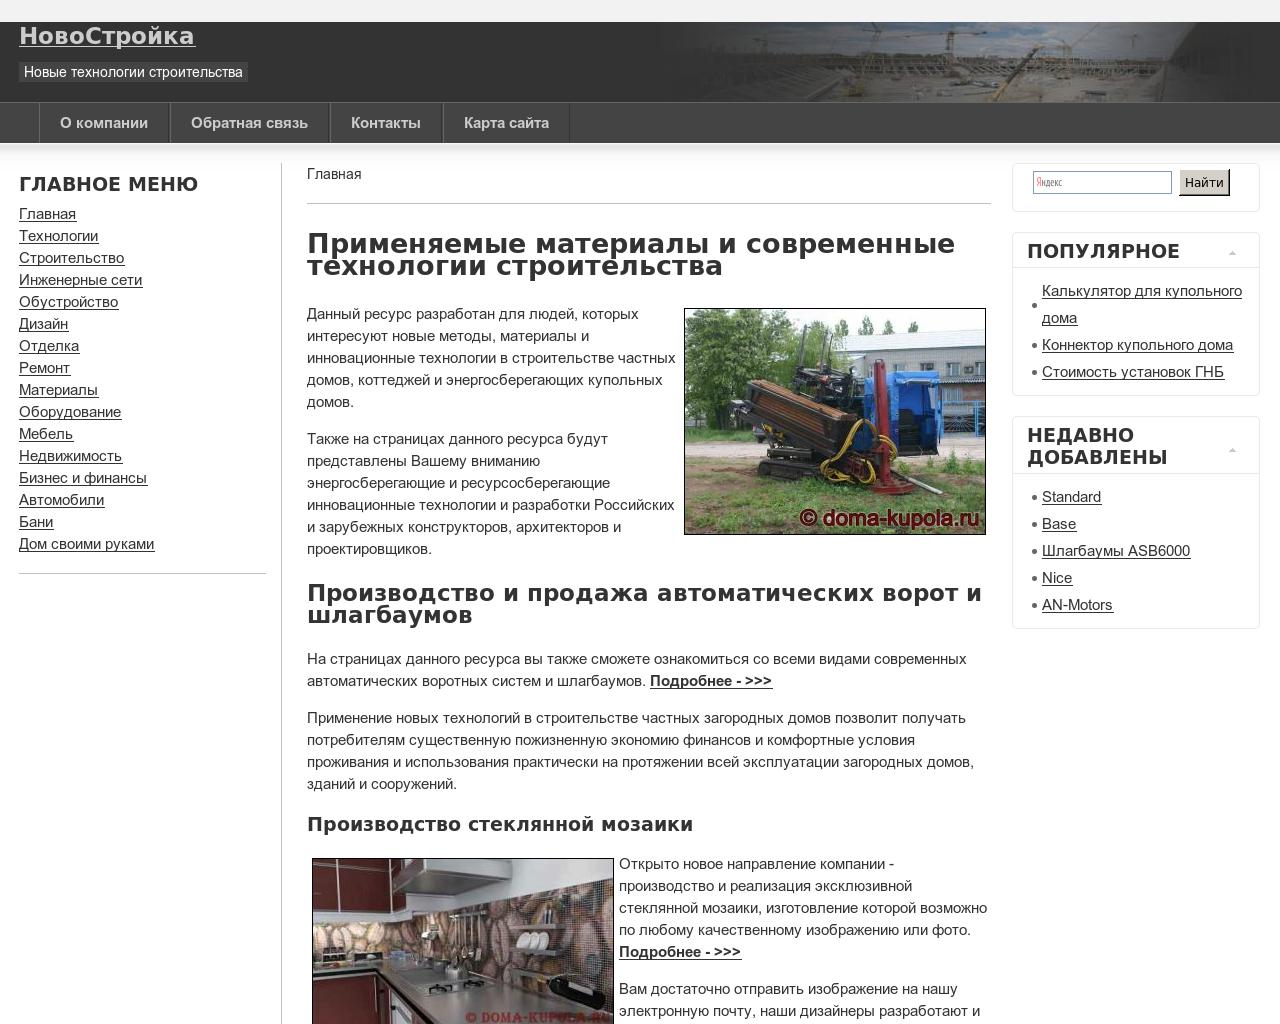 Изображение сайта doma-kupola.ru в разрешении 1280x1024